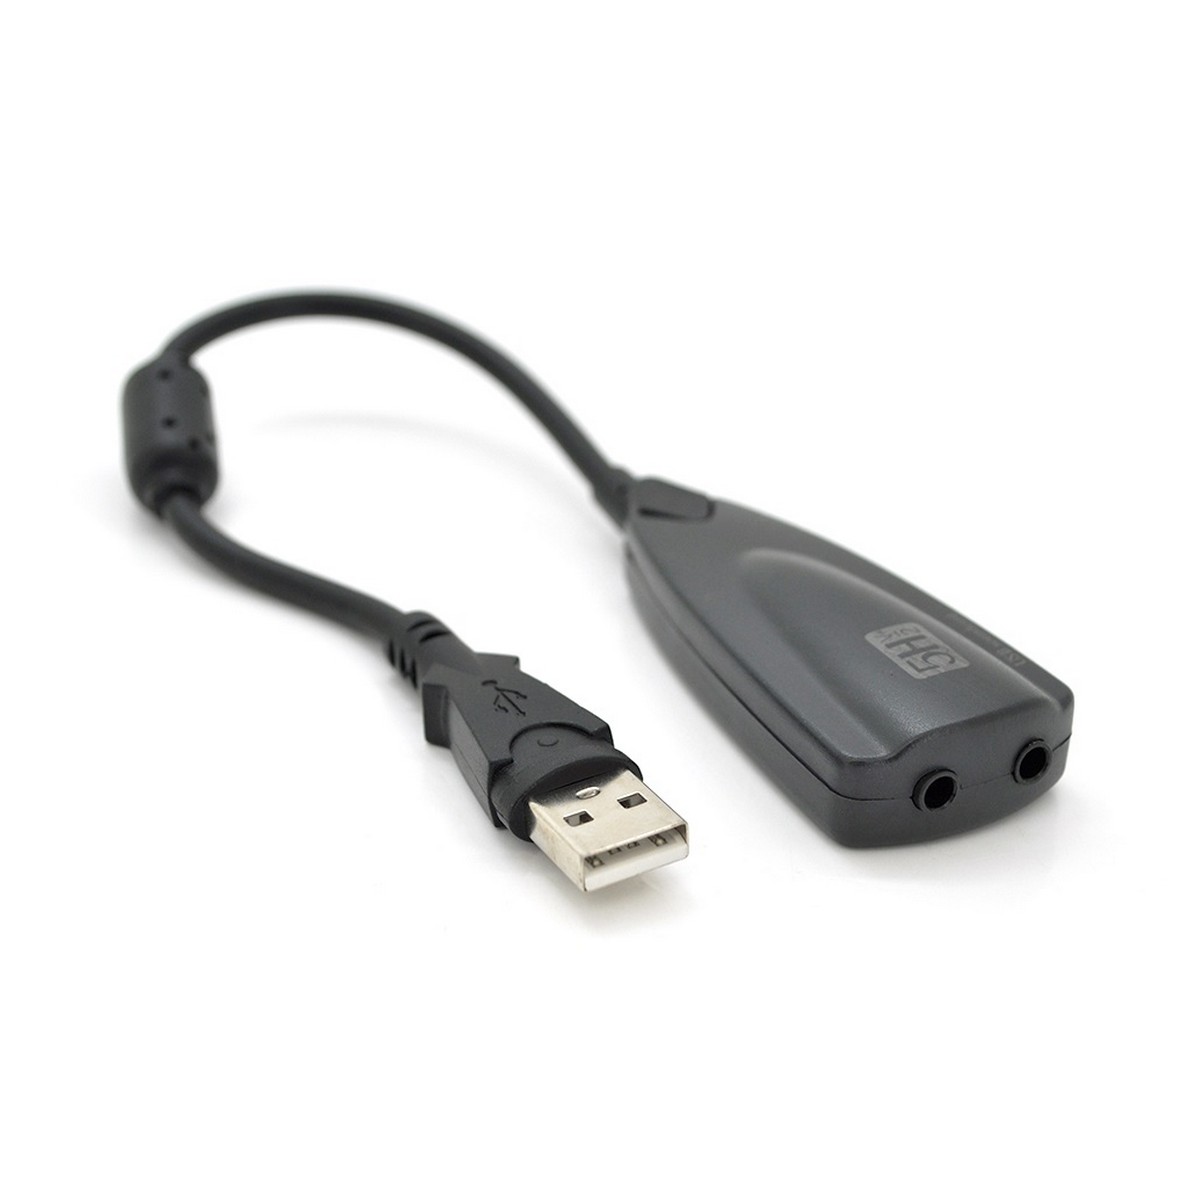 Звуковая карта Voltronic USB-sound card (7.1) 3D sound Black (YT-SC-7.1/07386)